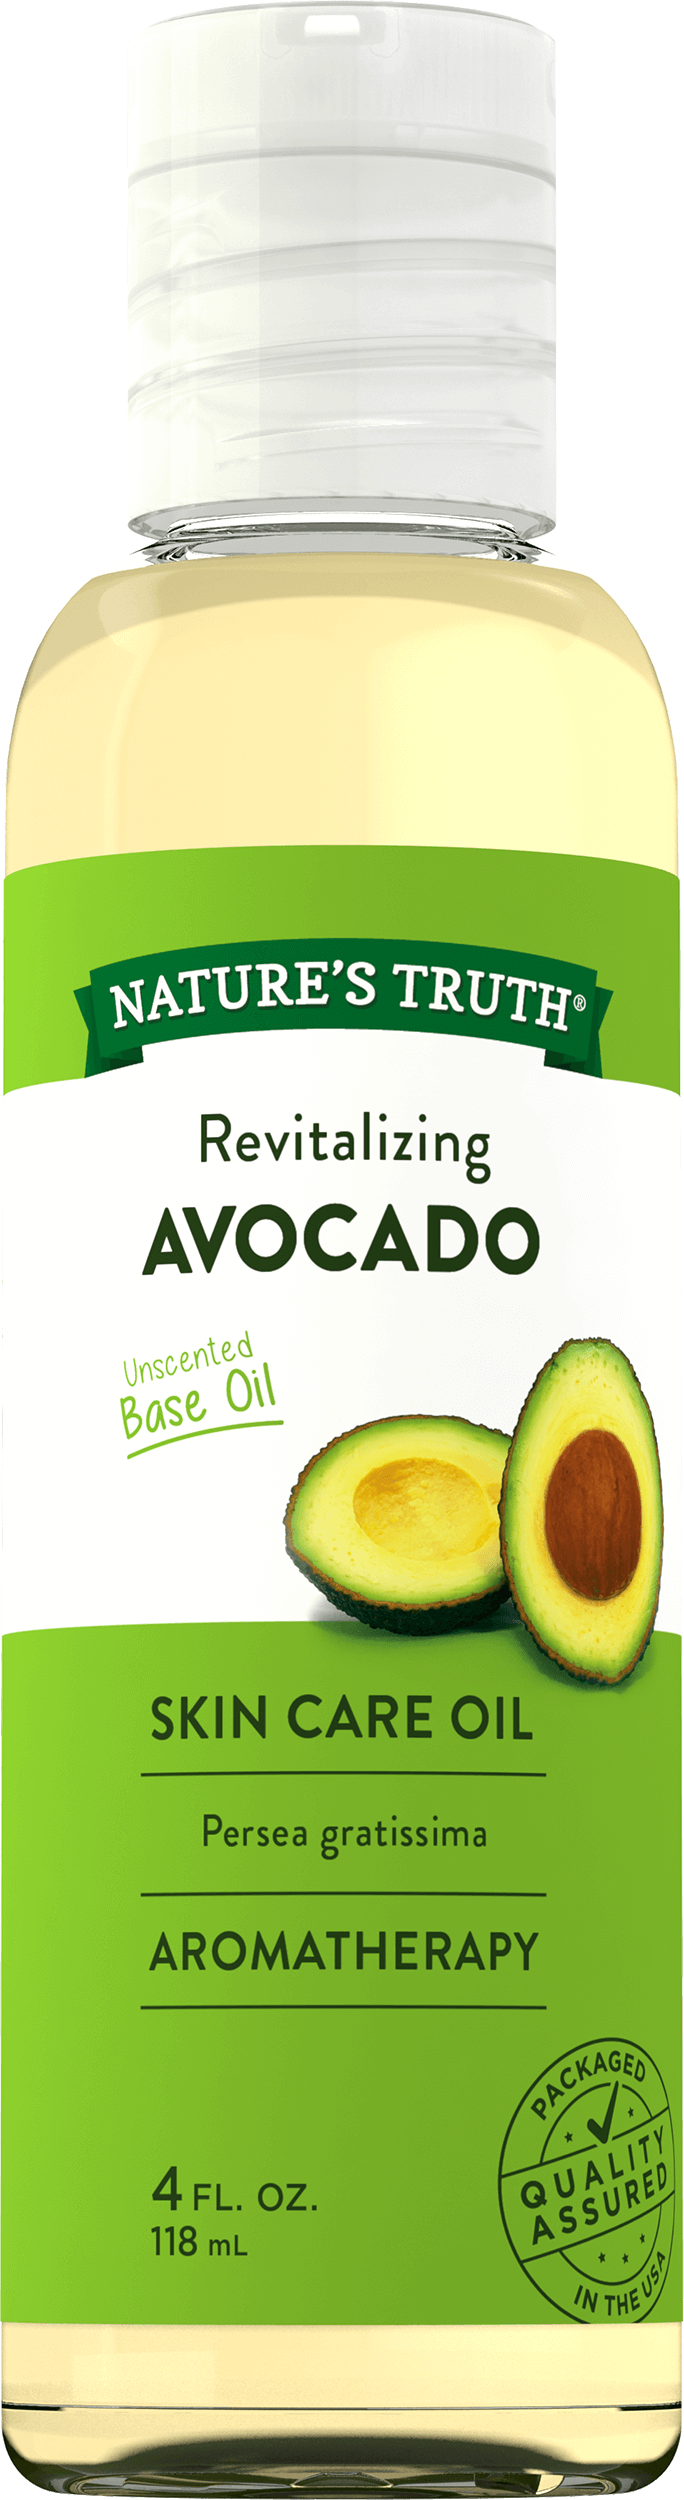 Nature’s Truth Avocado Skin Care Oil